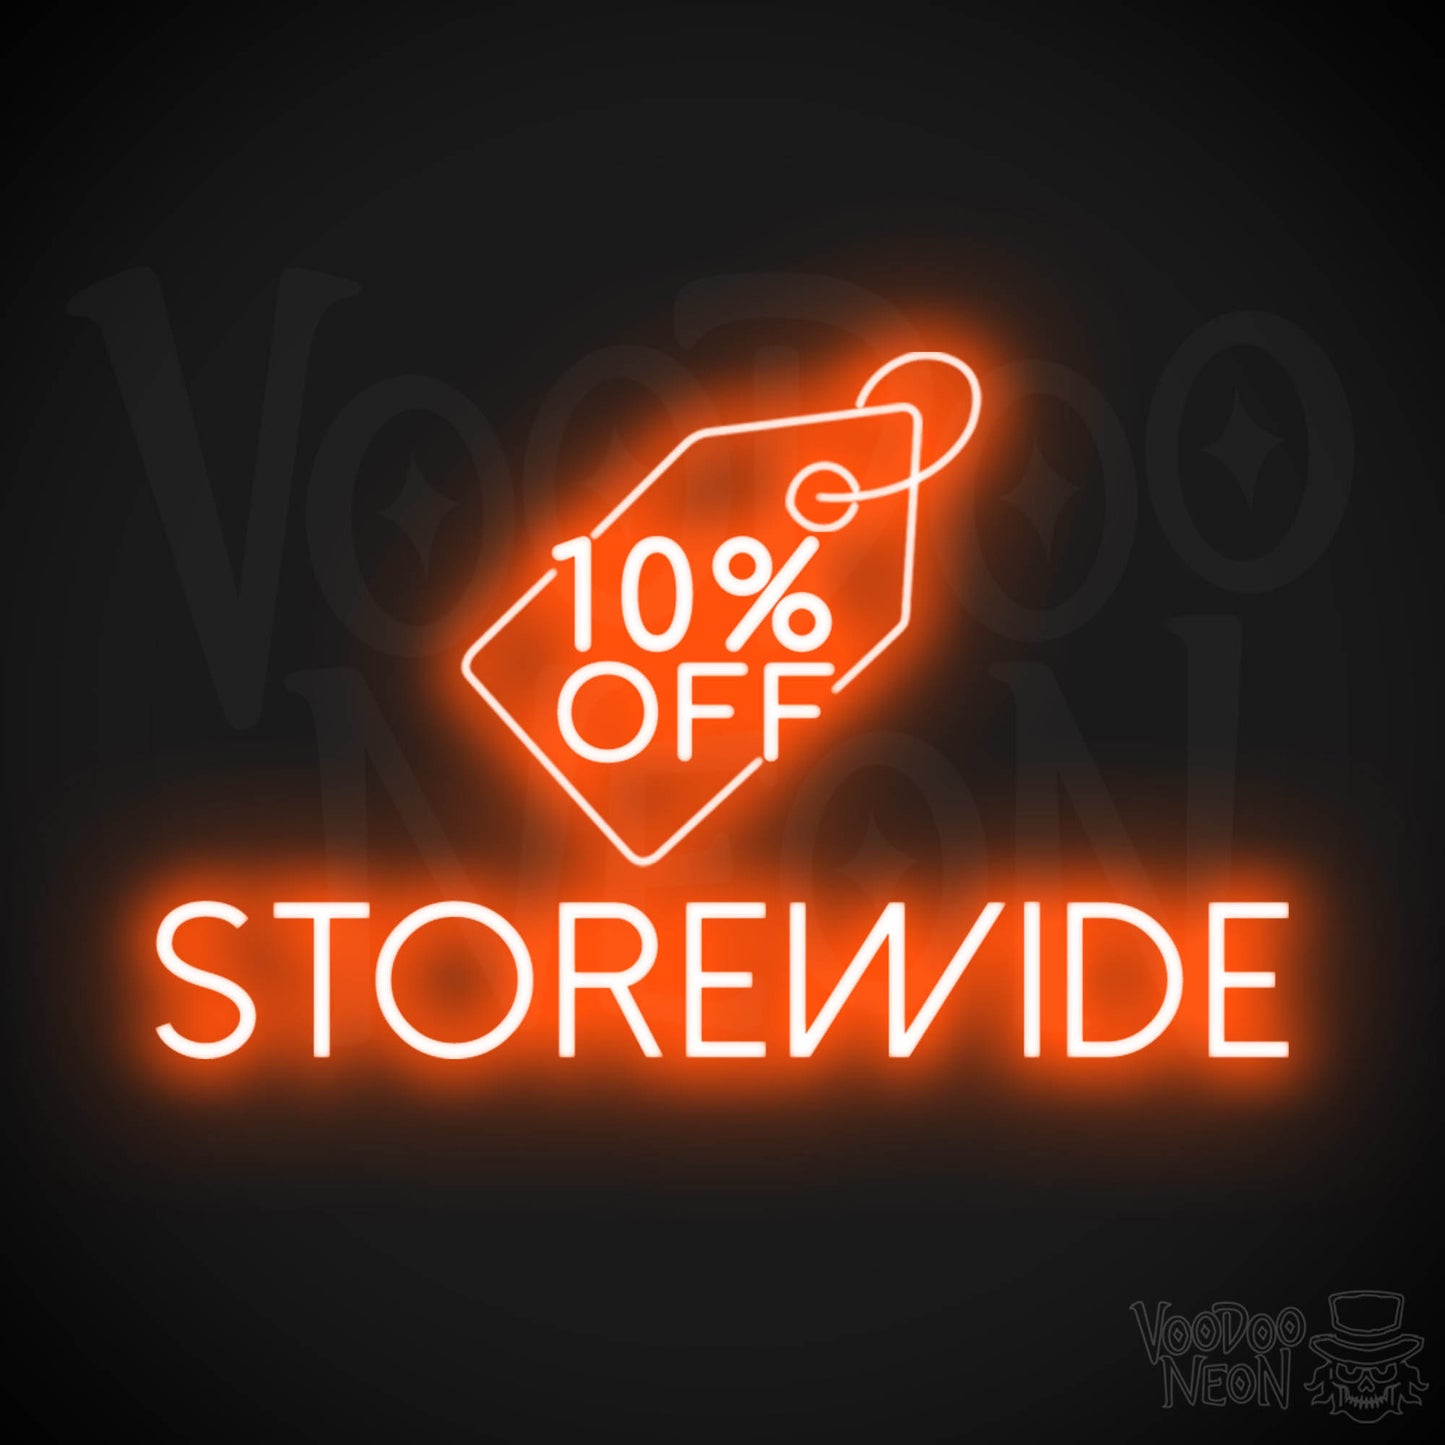 10% Off Storewide Neon Sign - 10% Off Storewide Sign - Neon Shop Signs - Color Orange